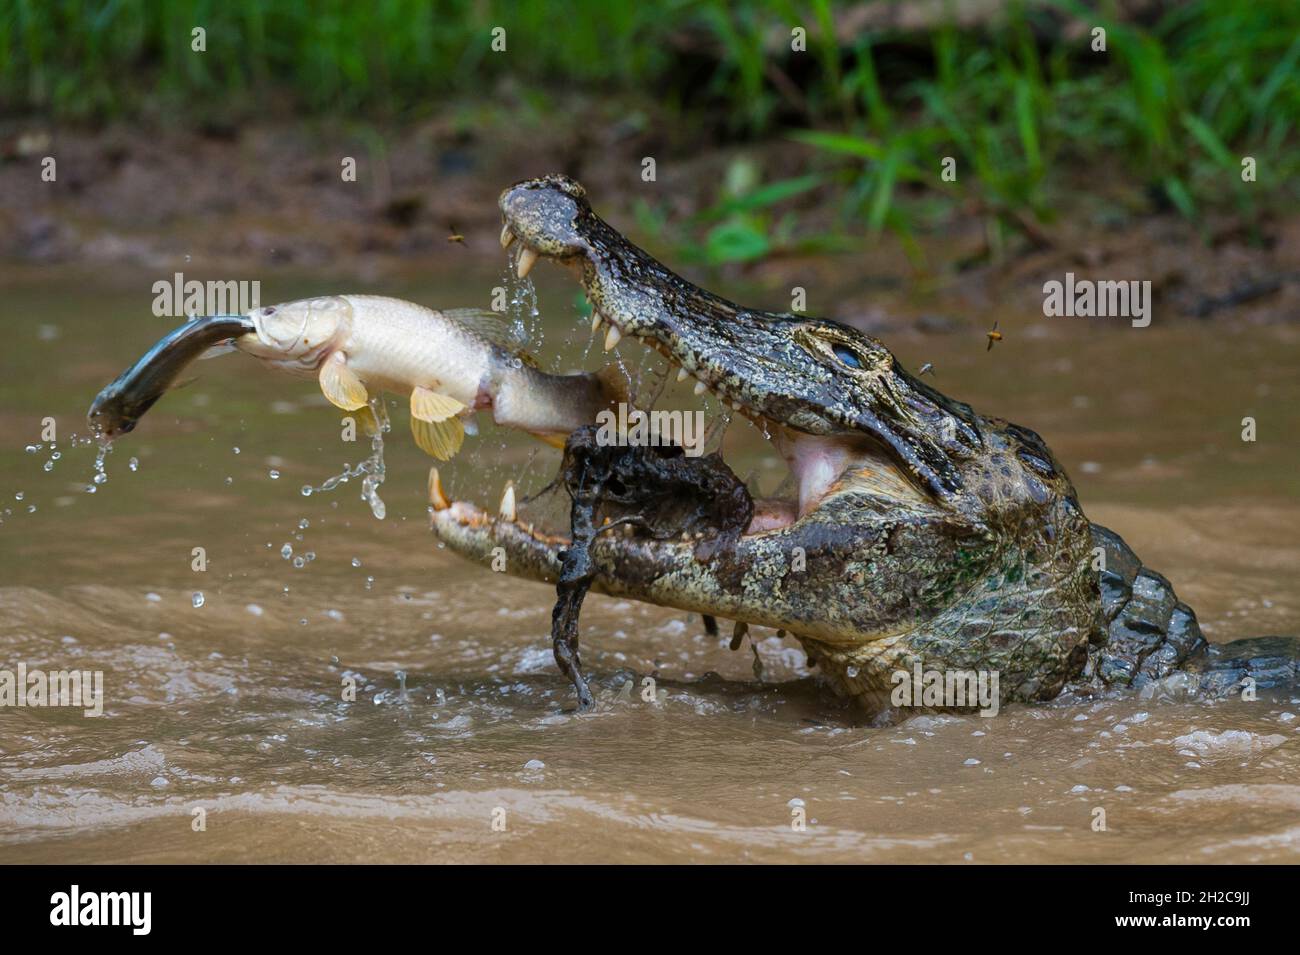 A yacare caiman (Caiman crocodylus yacare), catching a Tiger Fish (Hoplias malabaricus), catching a fish. Rio Negrinho, Pantanal, Mato Grosso, Brazil. Stock Photo